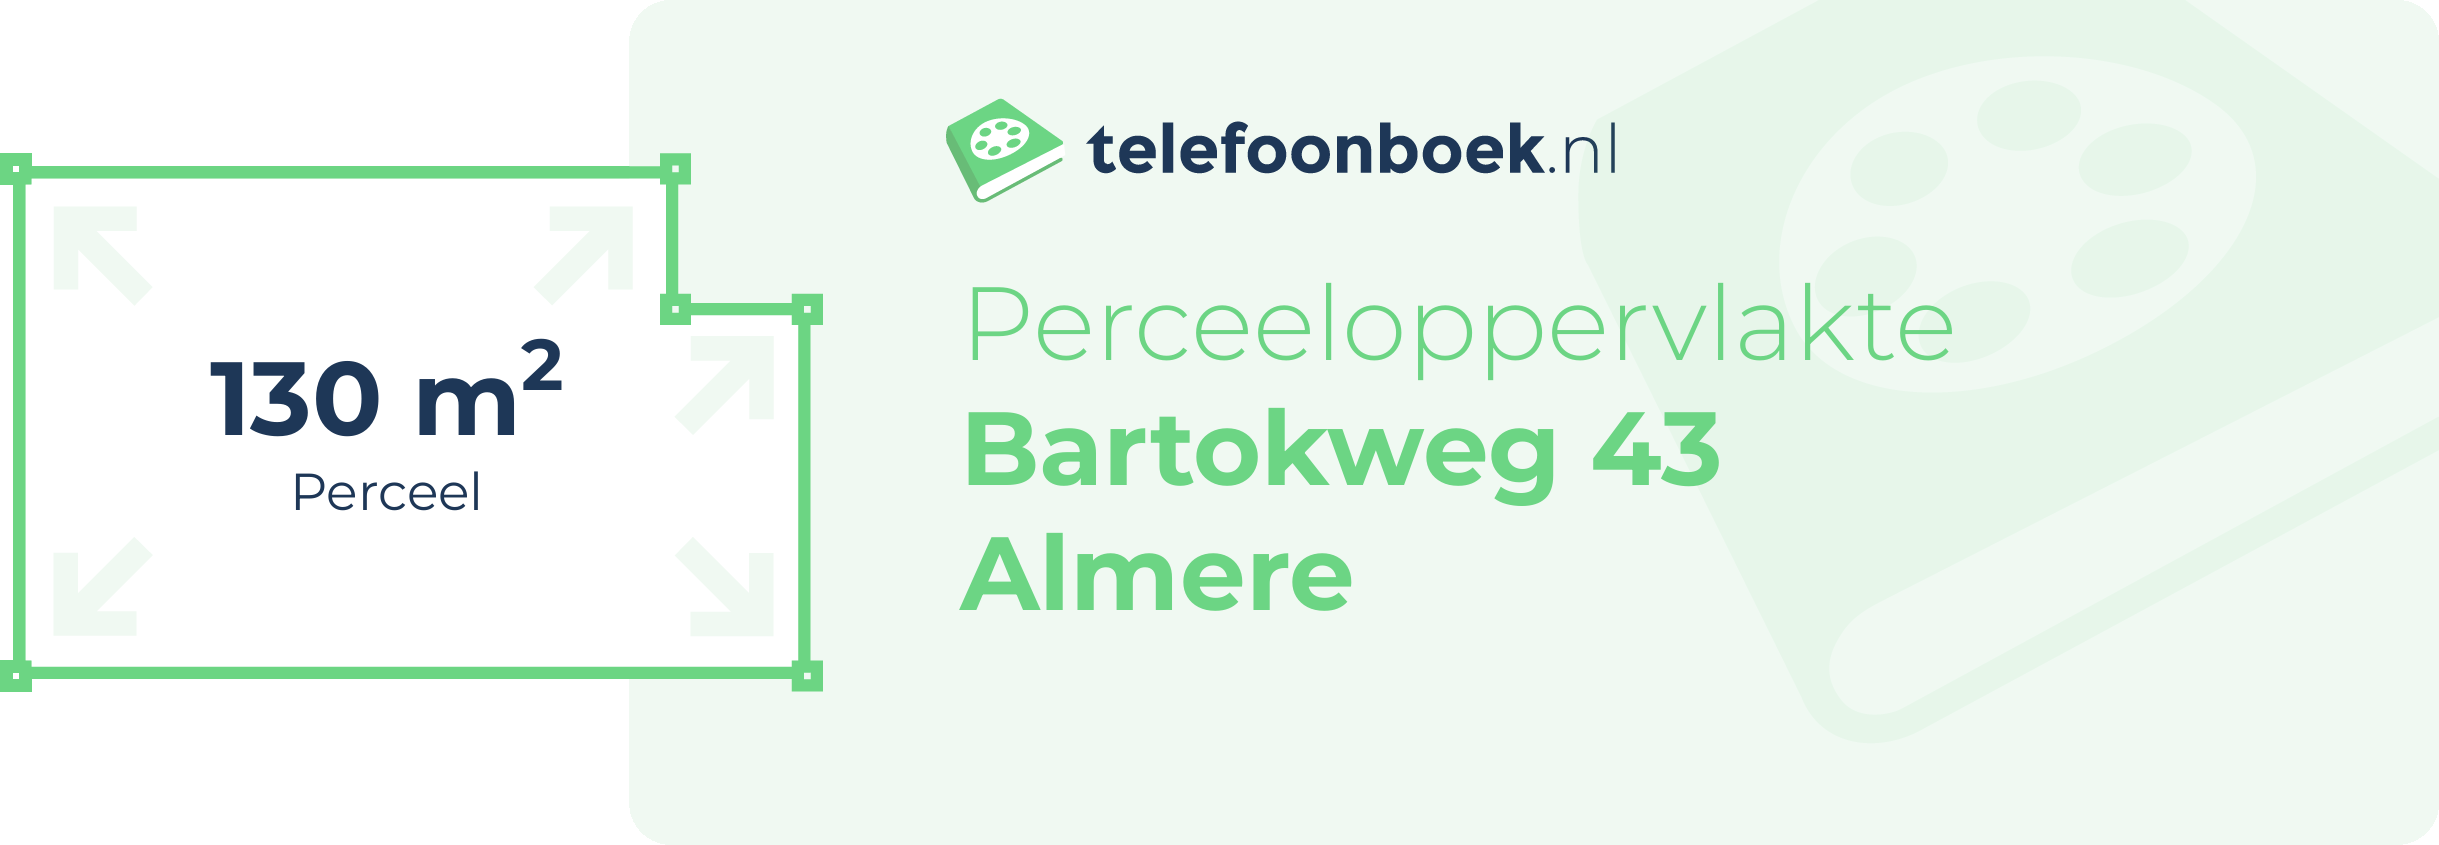 Perceeloppervlakte Bartokweg 43 Almere